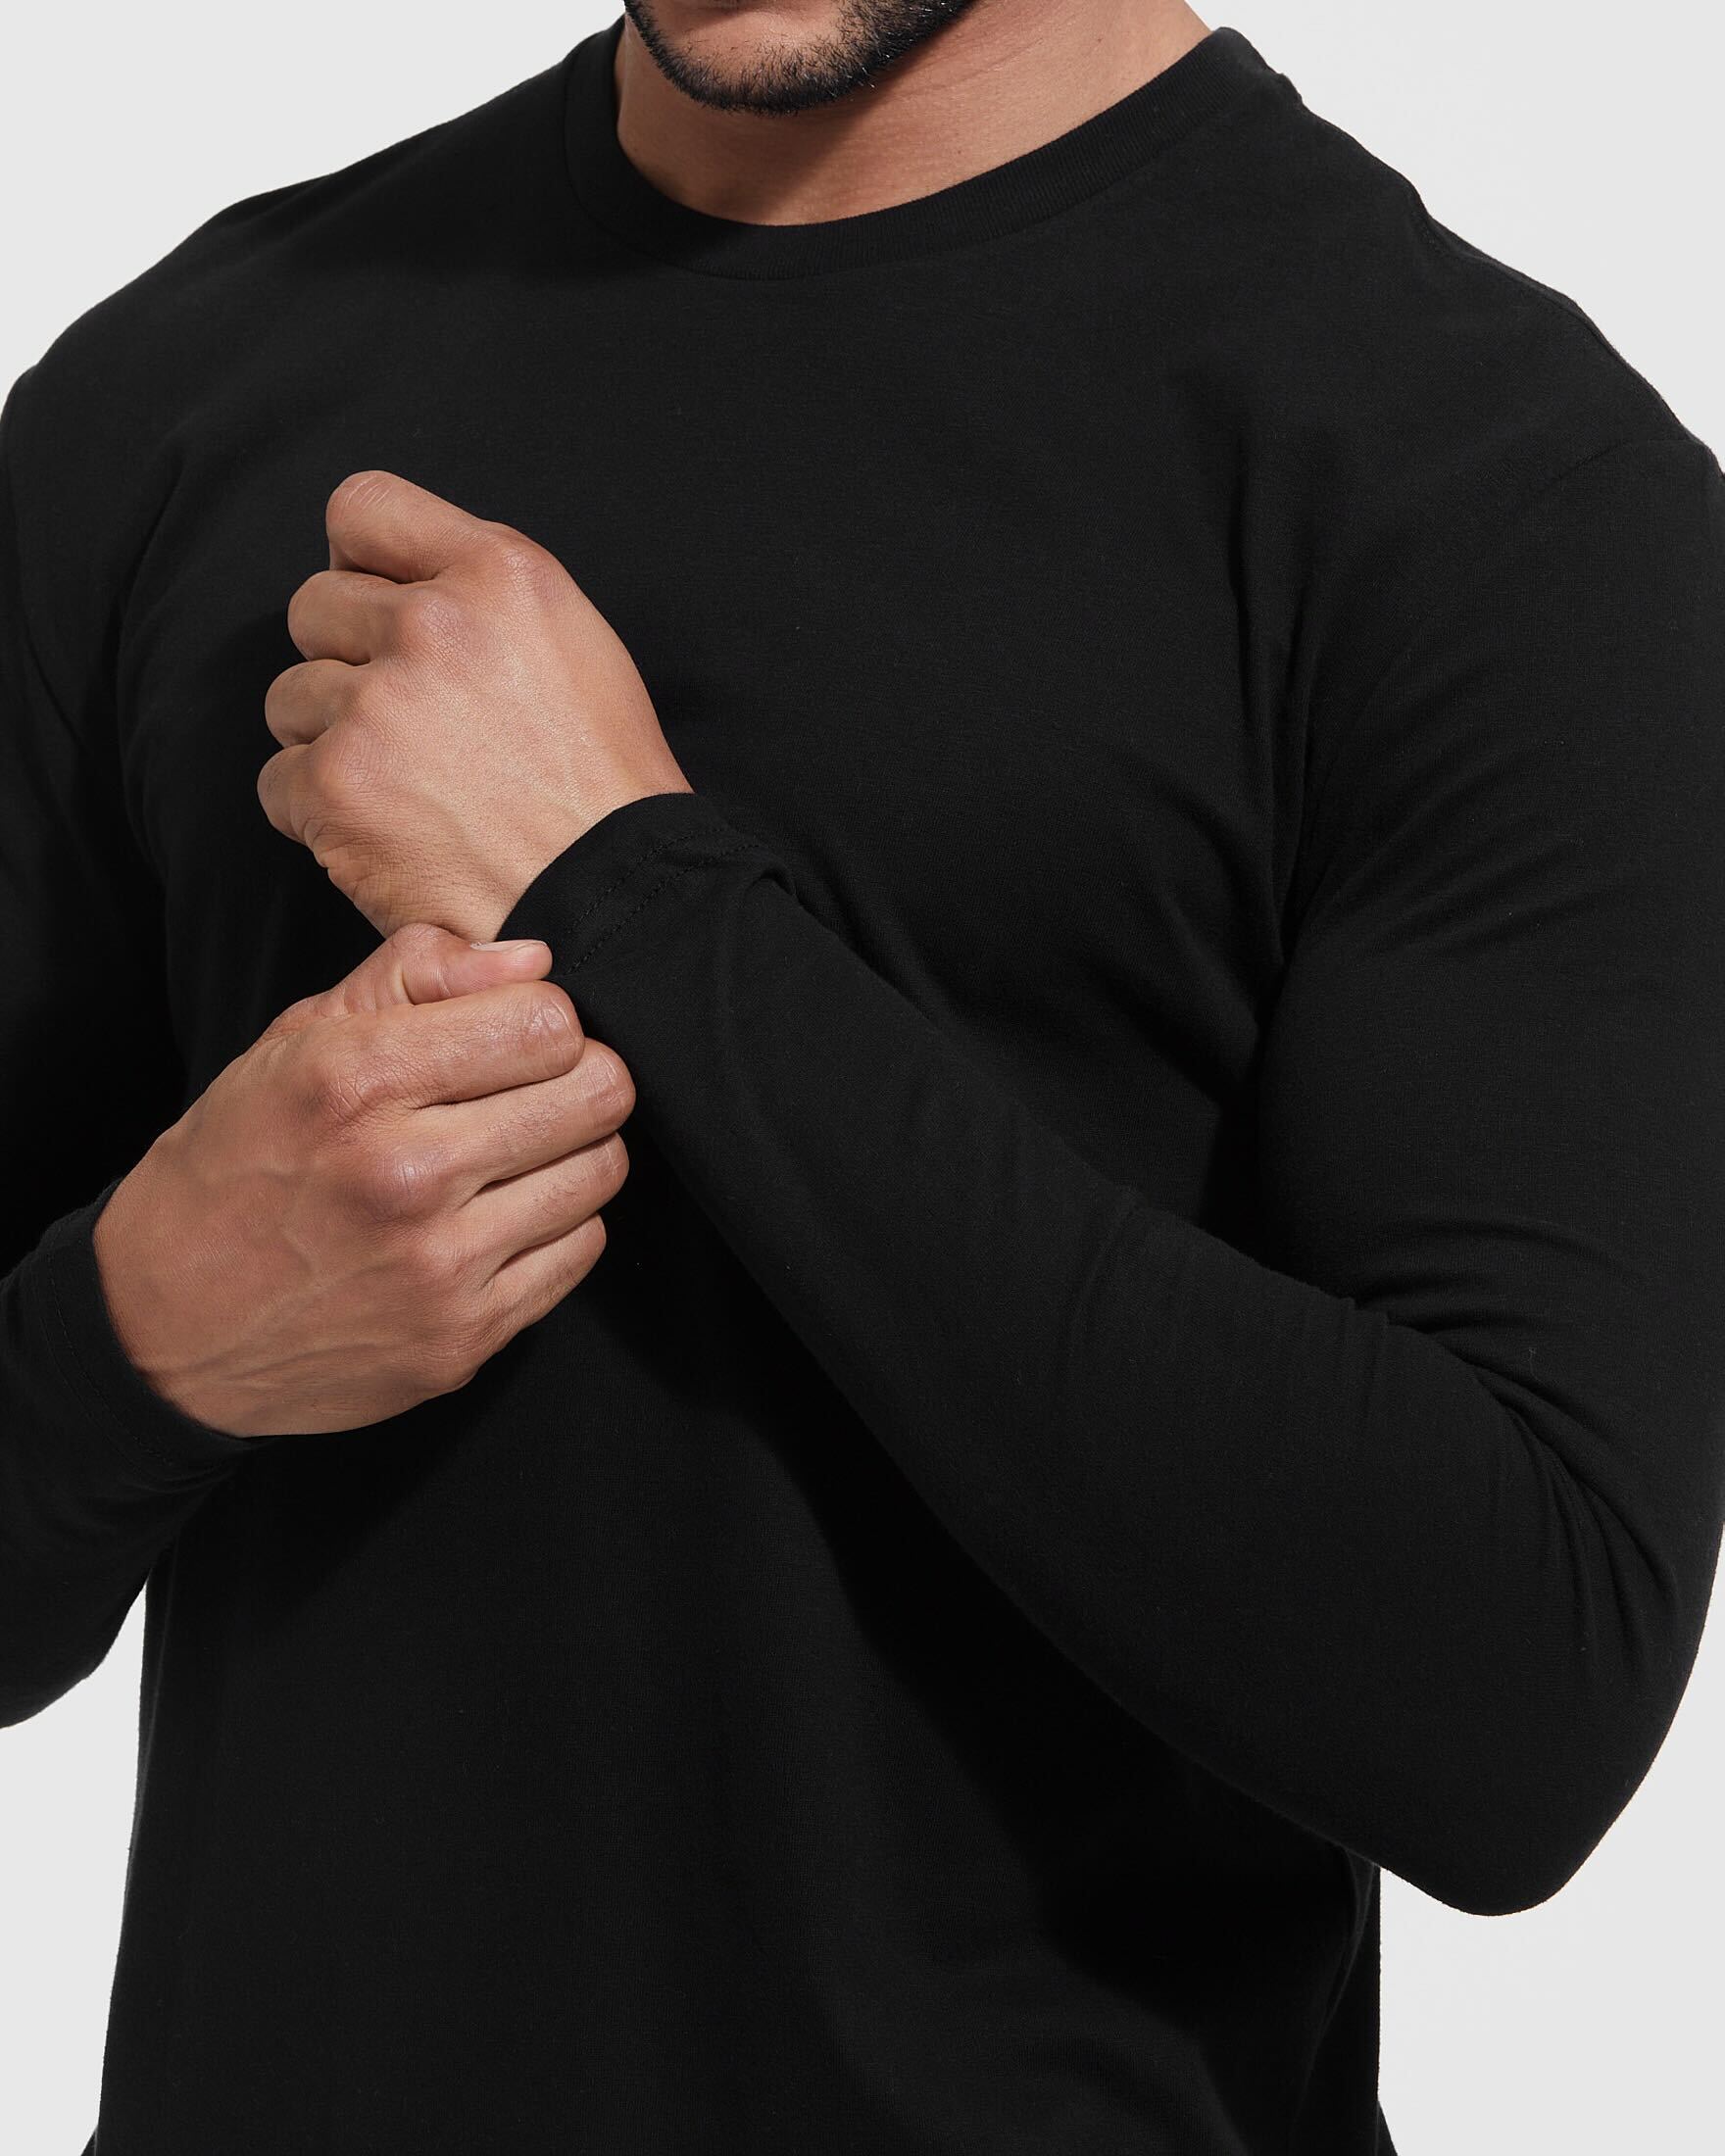 Spyder Logo Tech Shirt Long Sleeve Top - Black - Mens